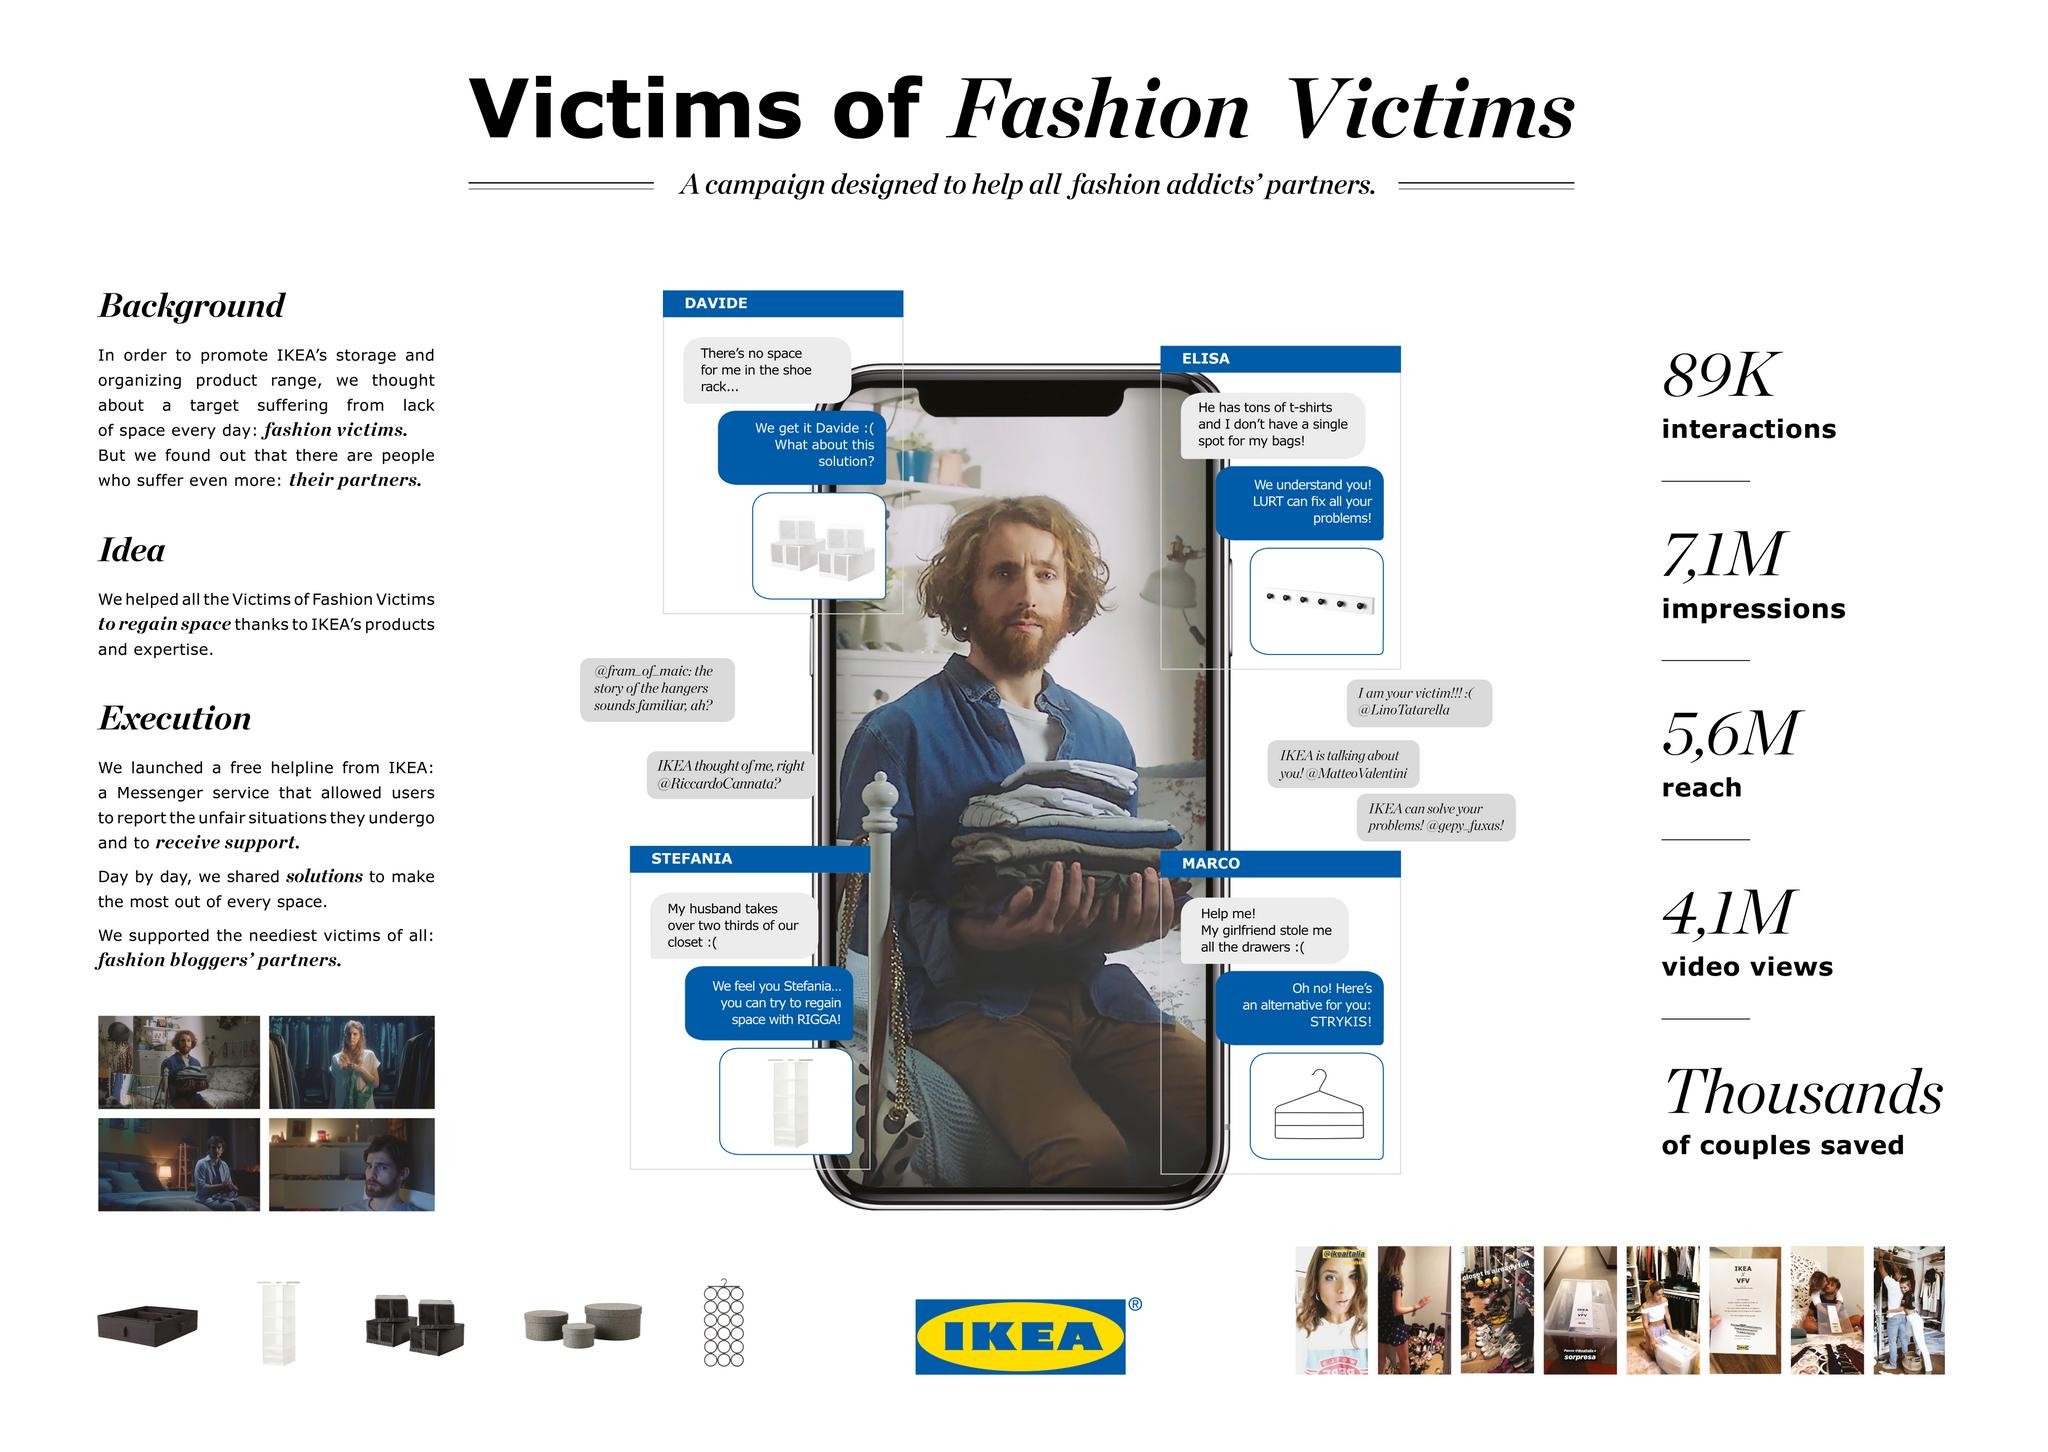 Victims of fashion victims